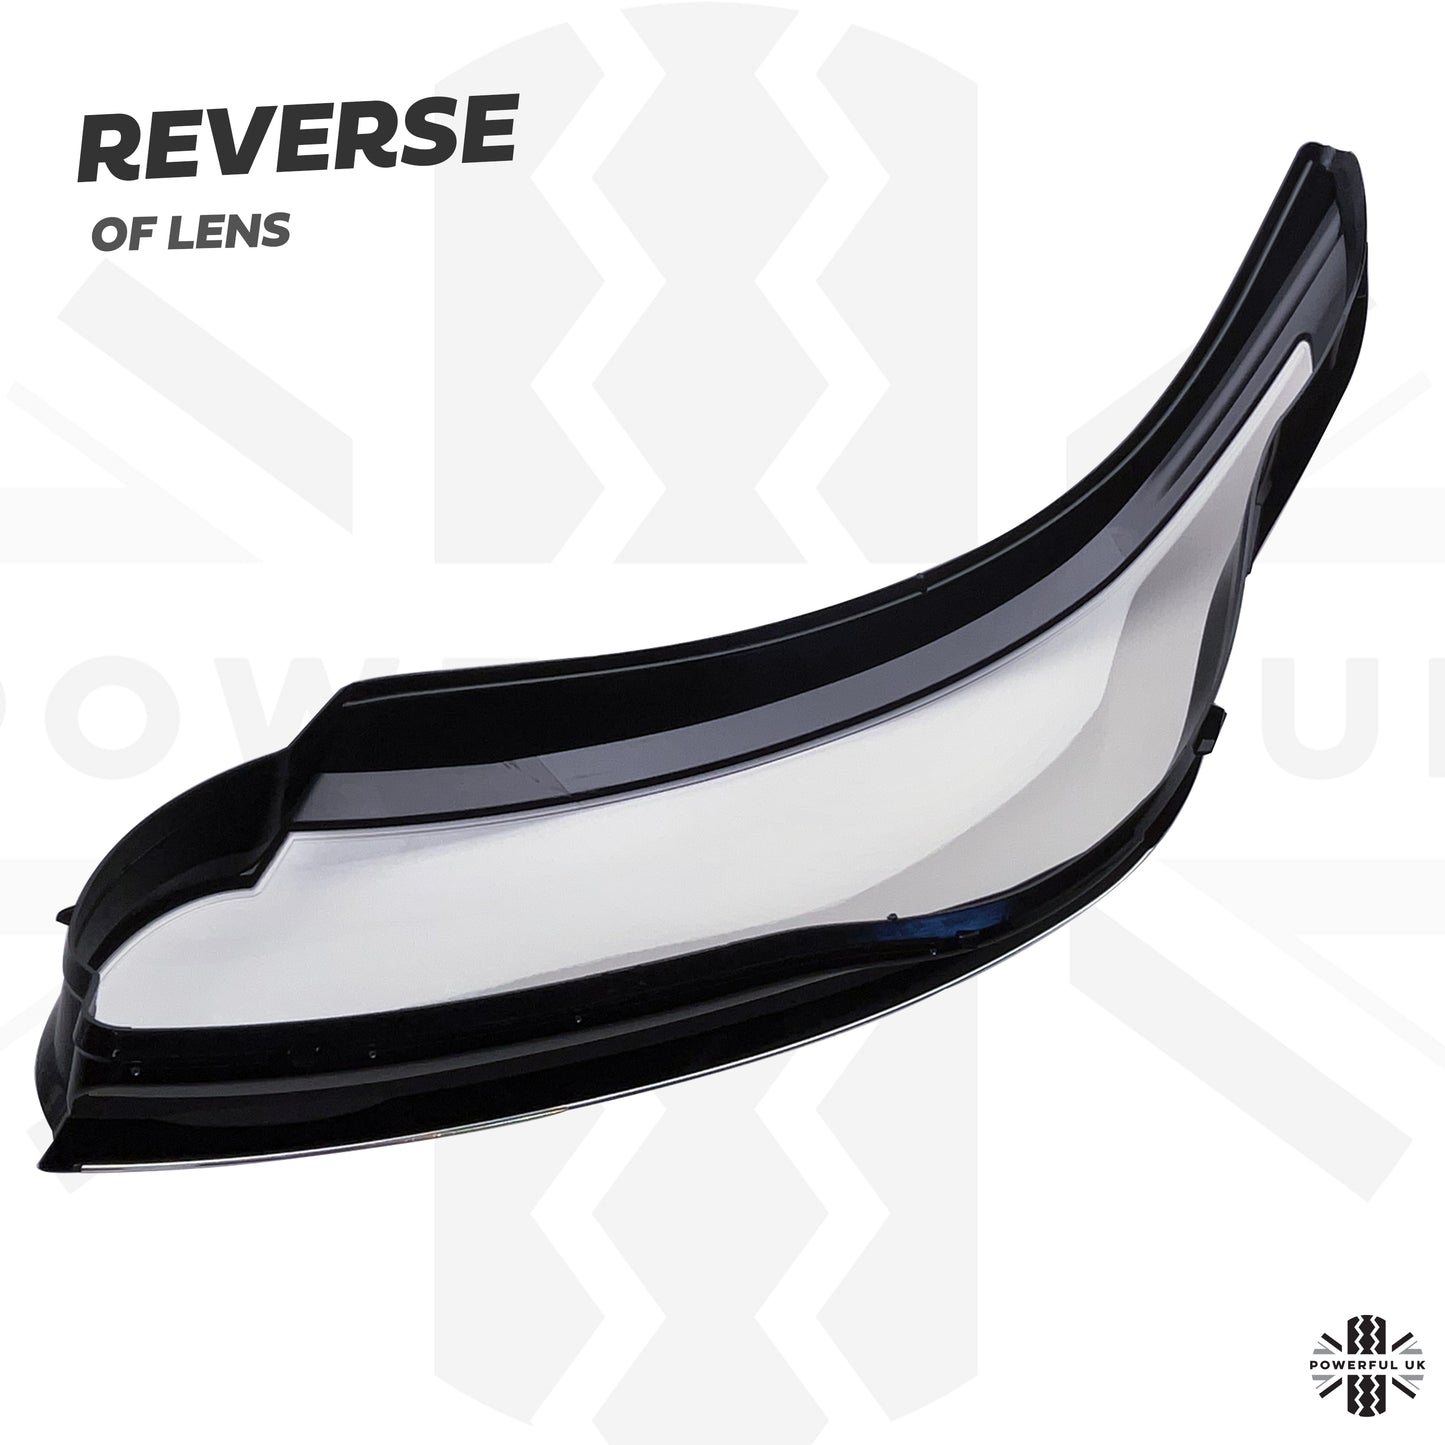 Replacement Headlight Lens for Range Rover Sport 2014-17 - RH